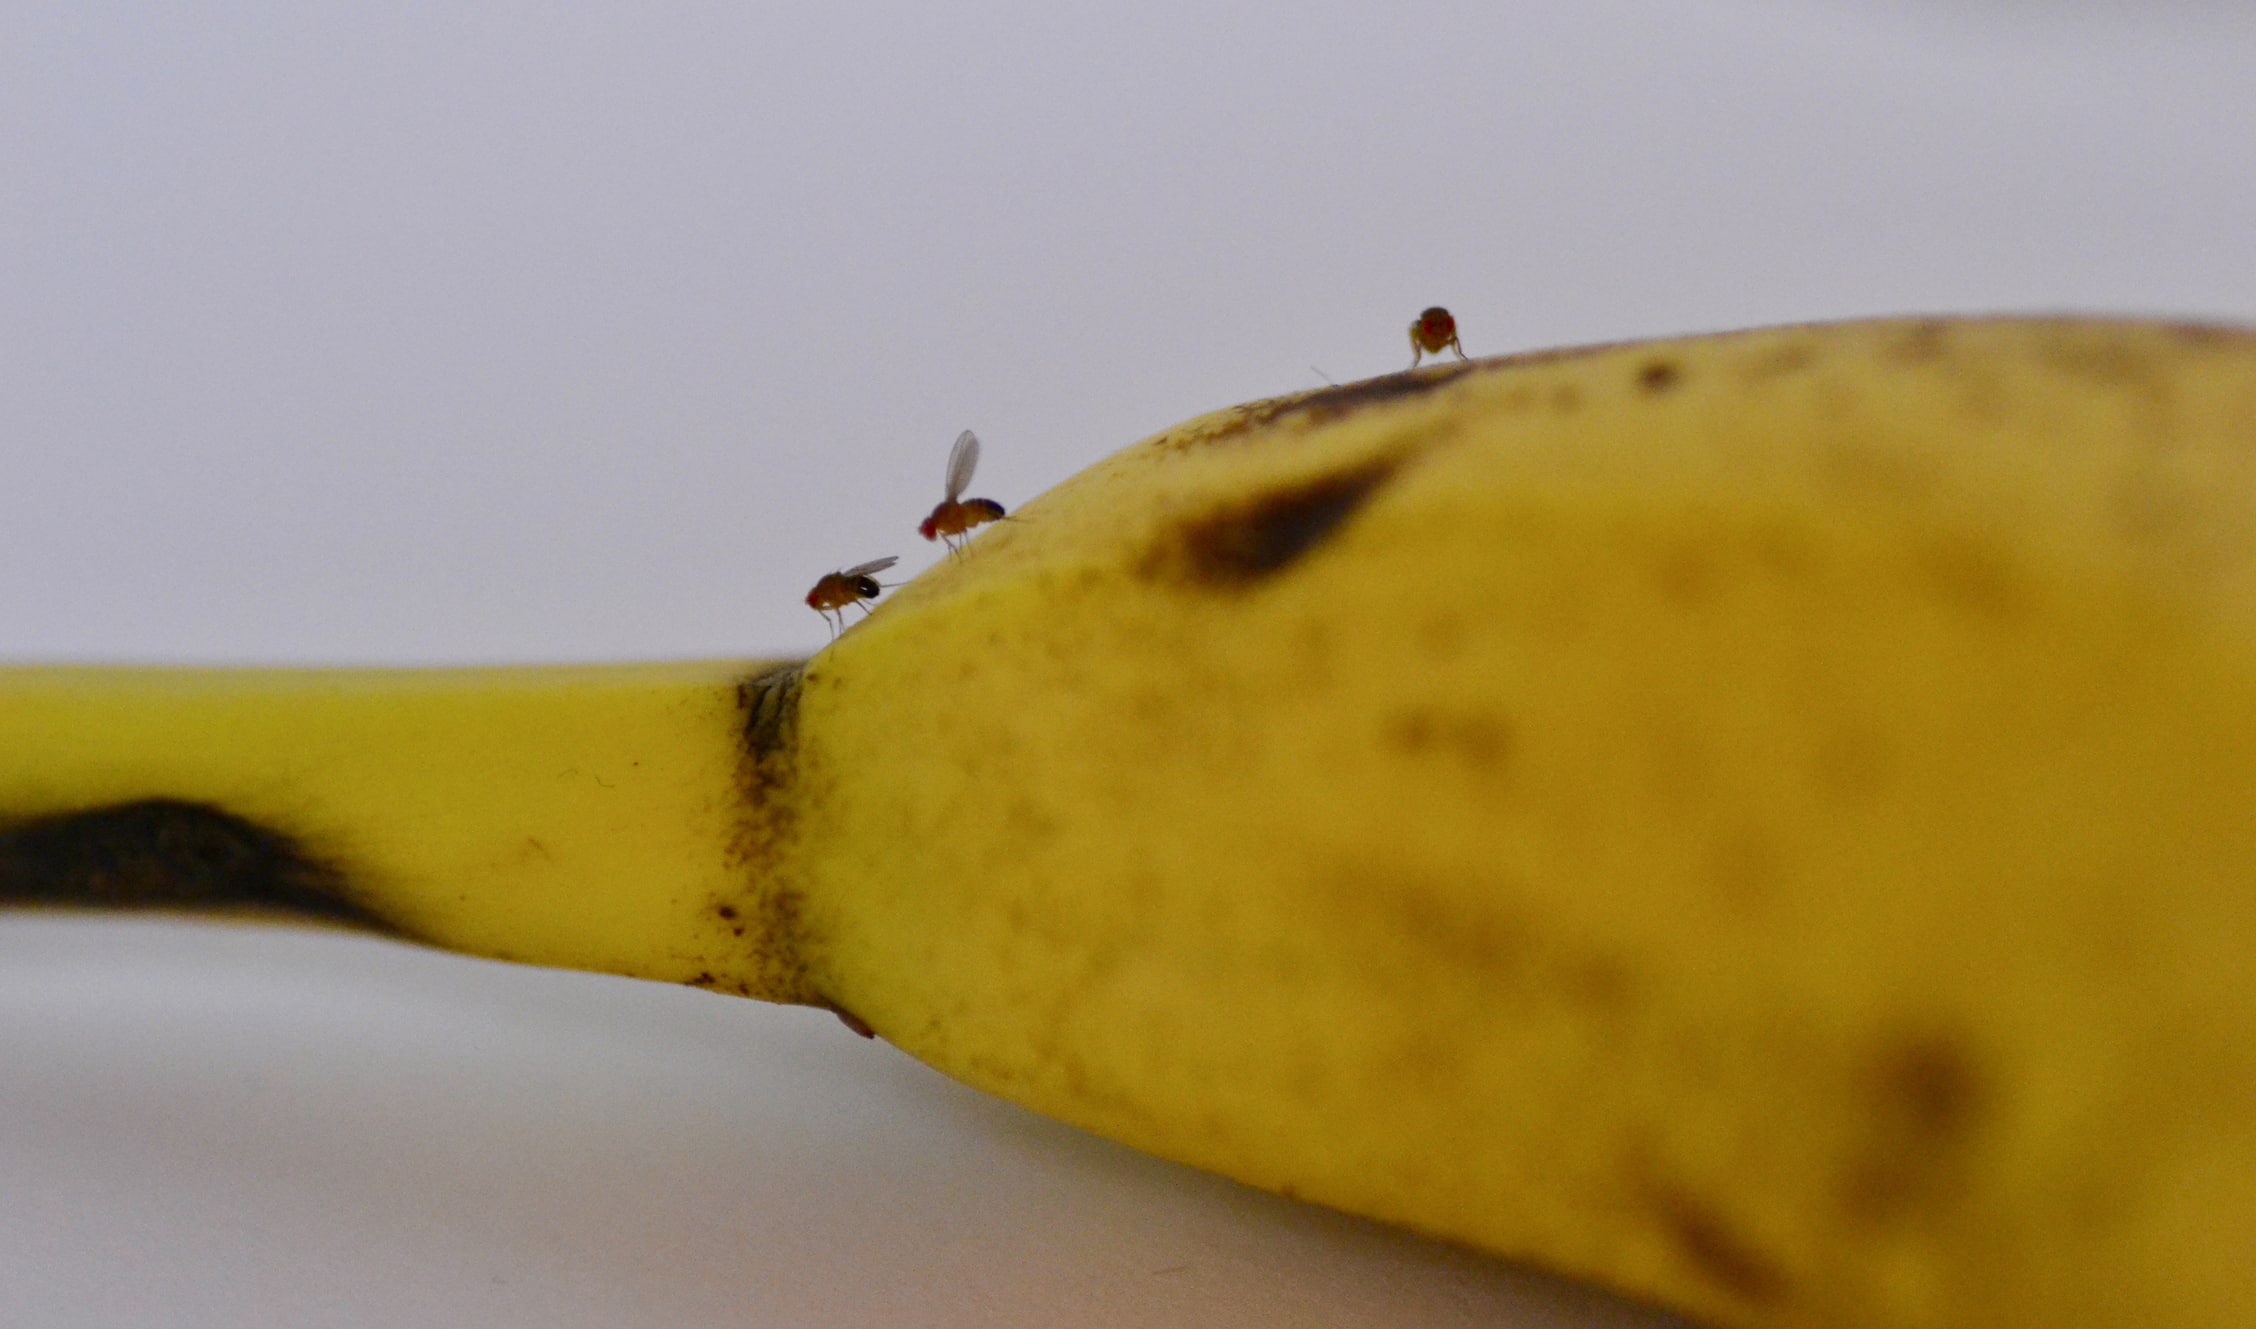 How to Get Rid of Fruit Flies - 